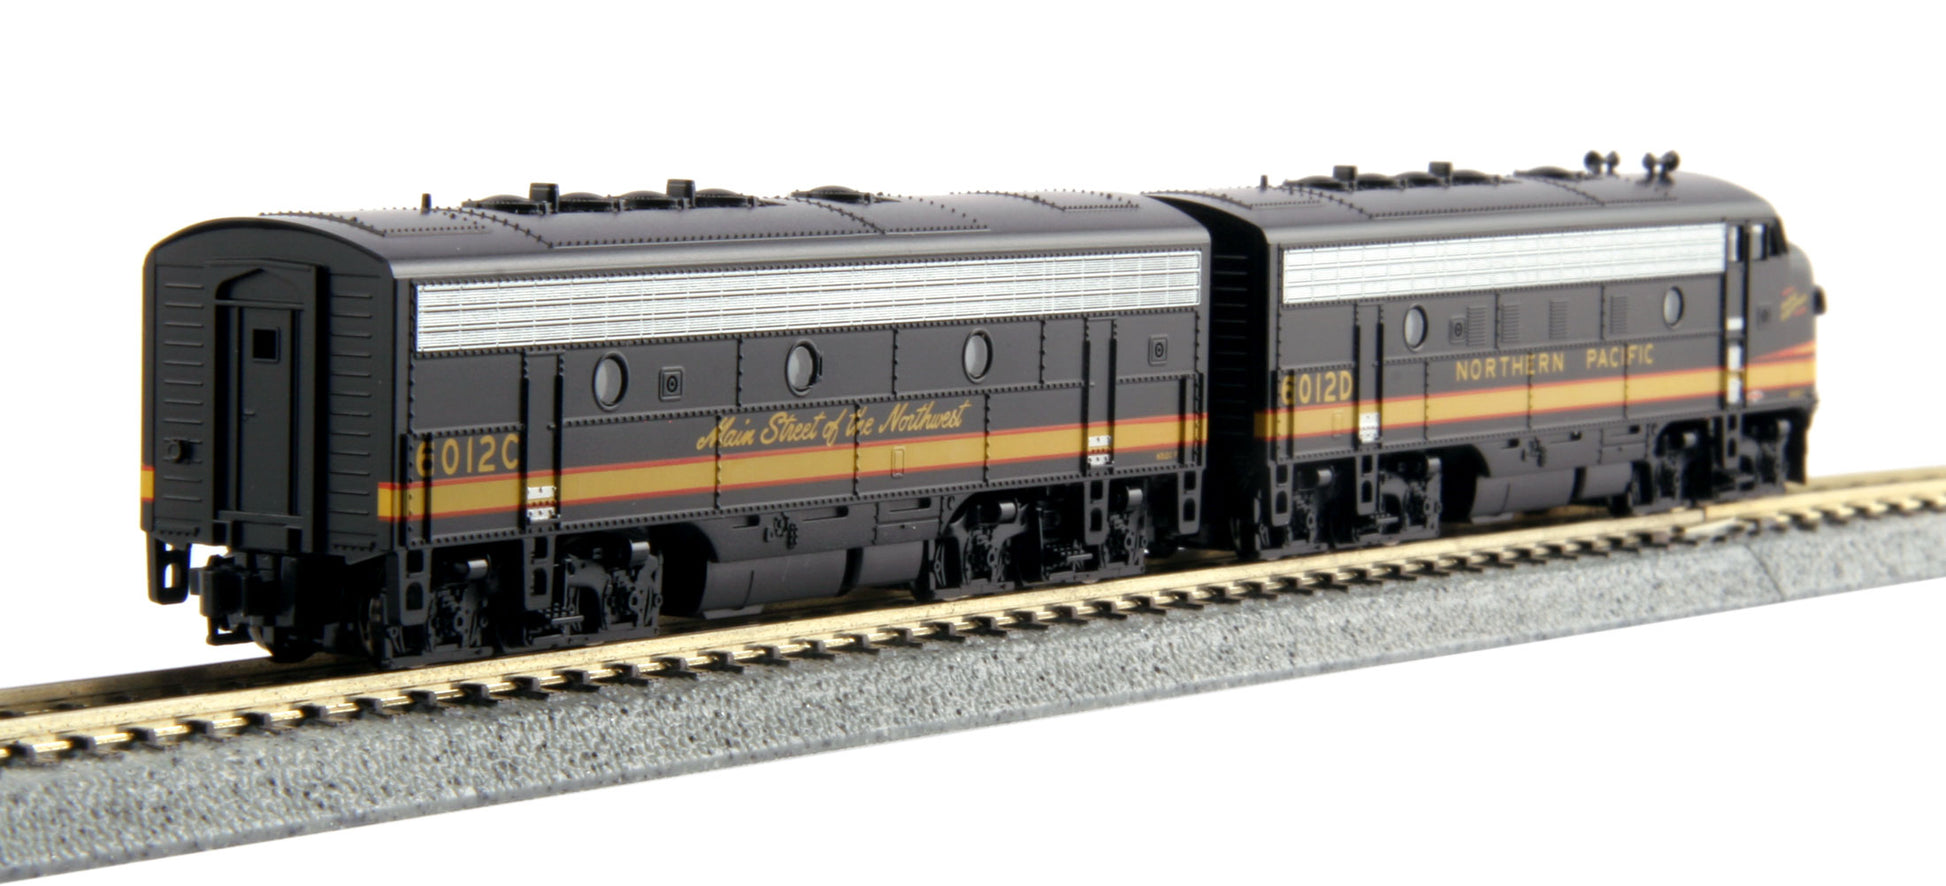 Kato 106-0423-DCC N NP EMD F7A & F7B Diesel Locomotive with DCC #6012C,6012D